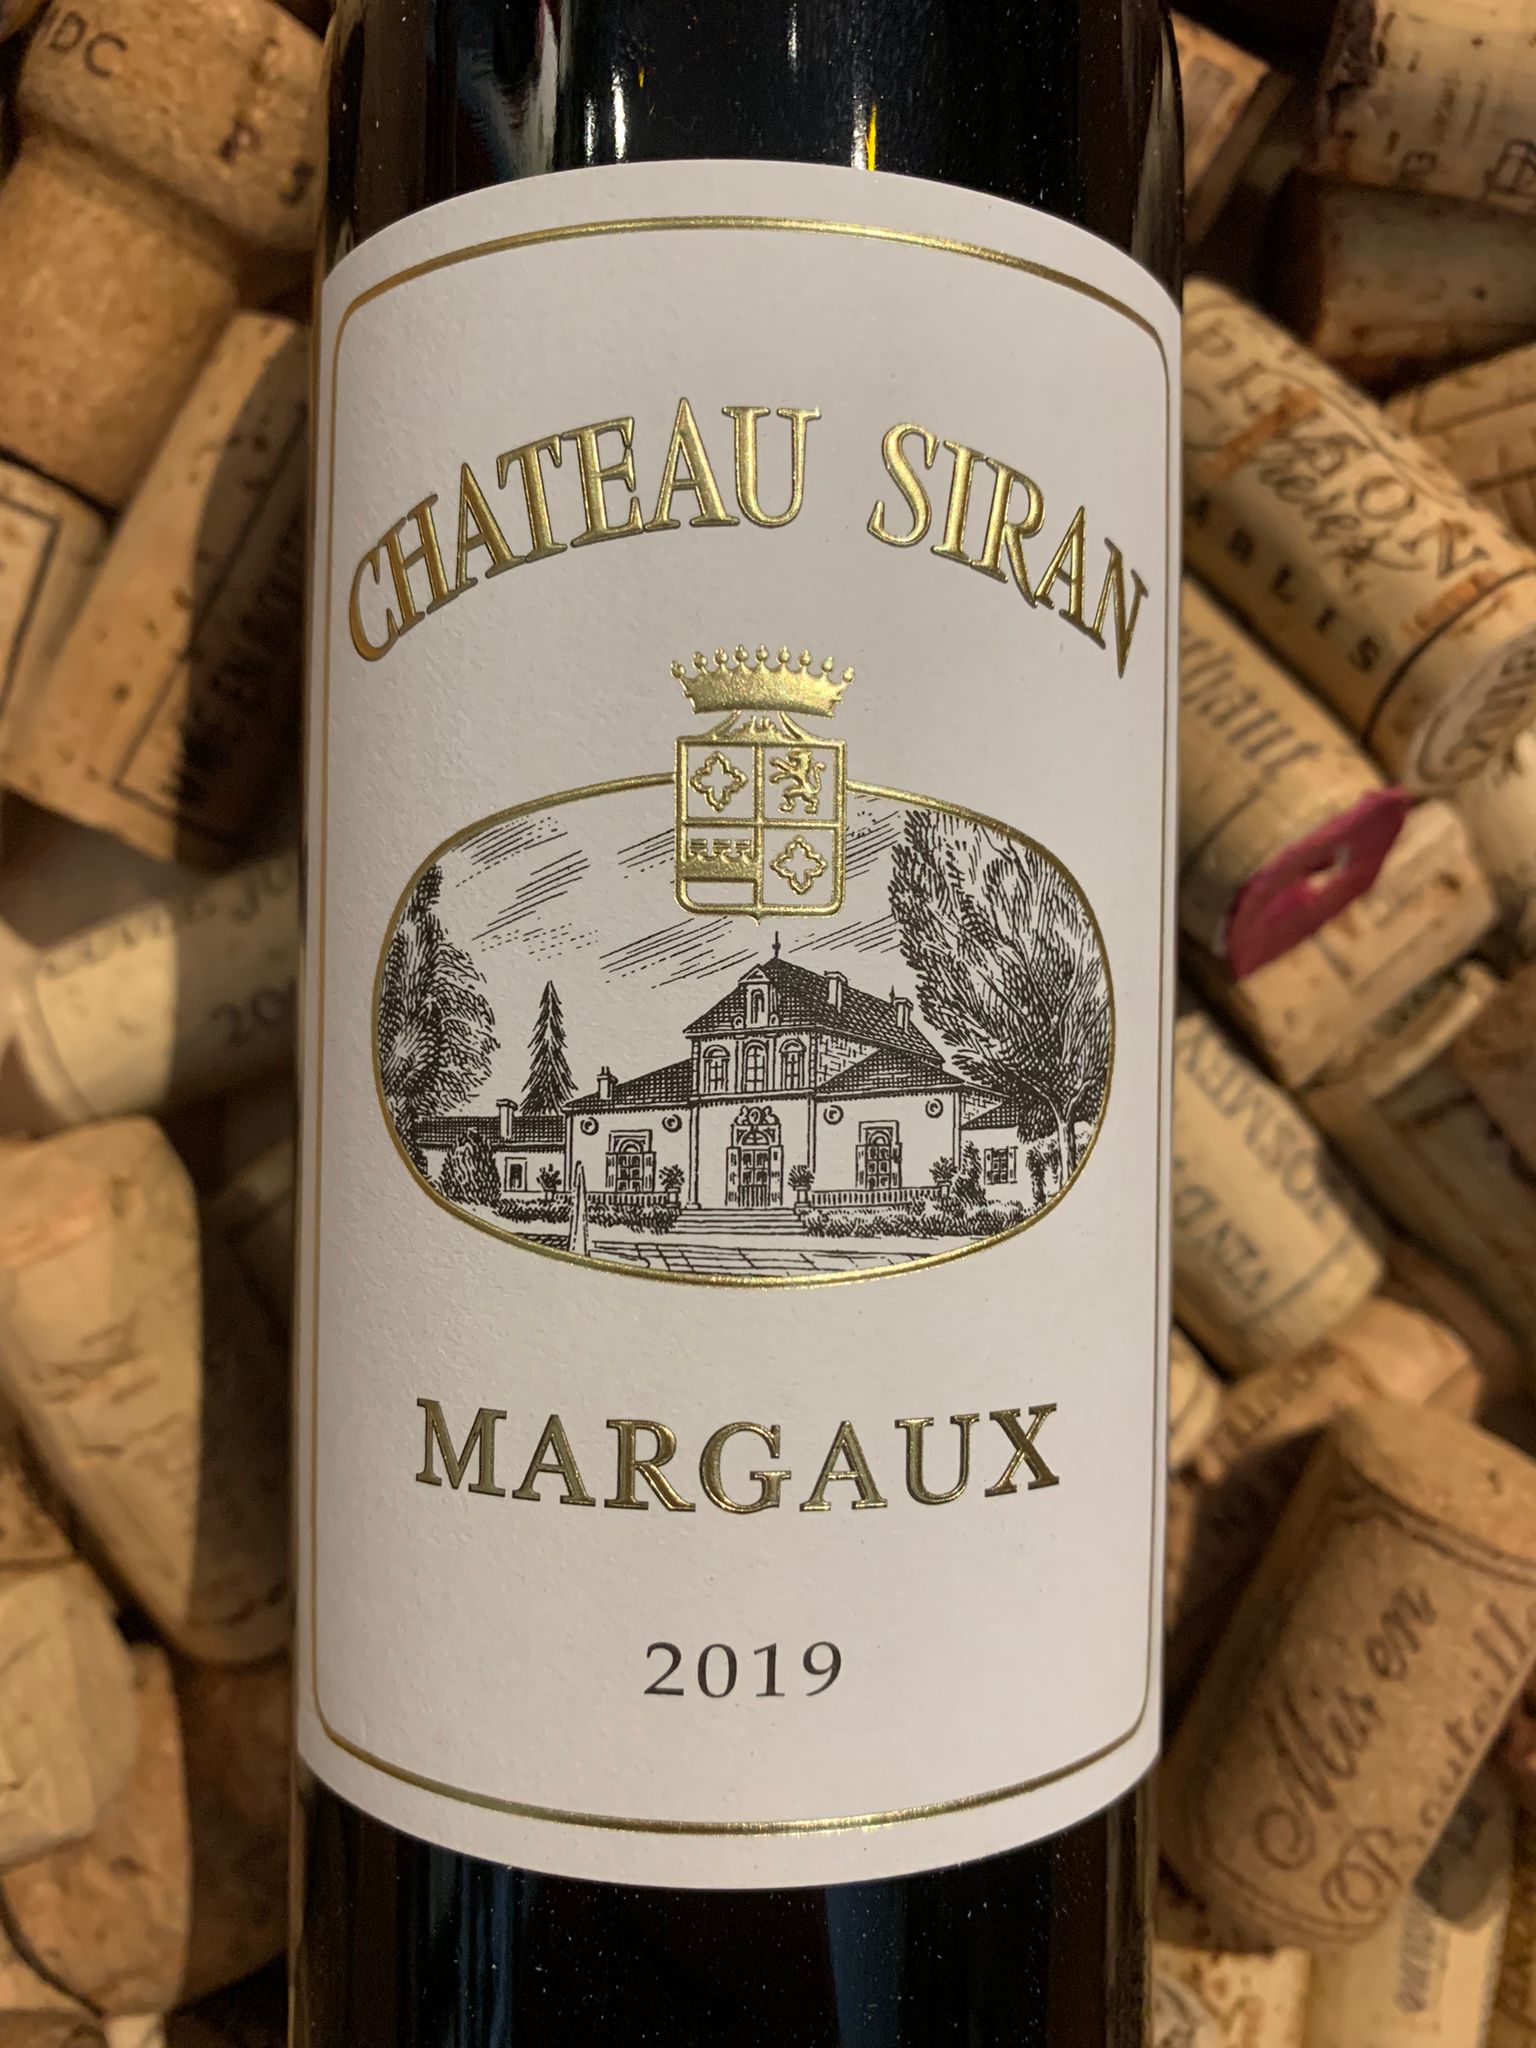 Chateau Siran Margaux 2019 Demi-Bouteille